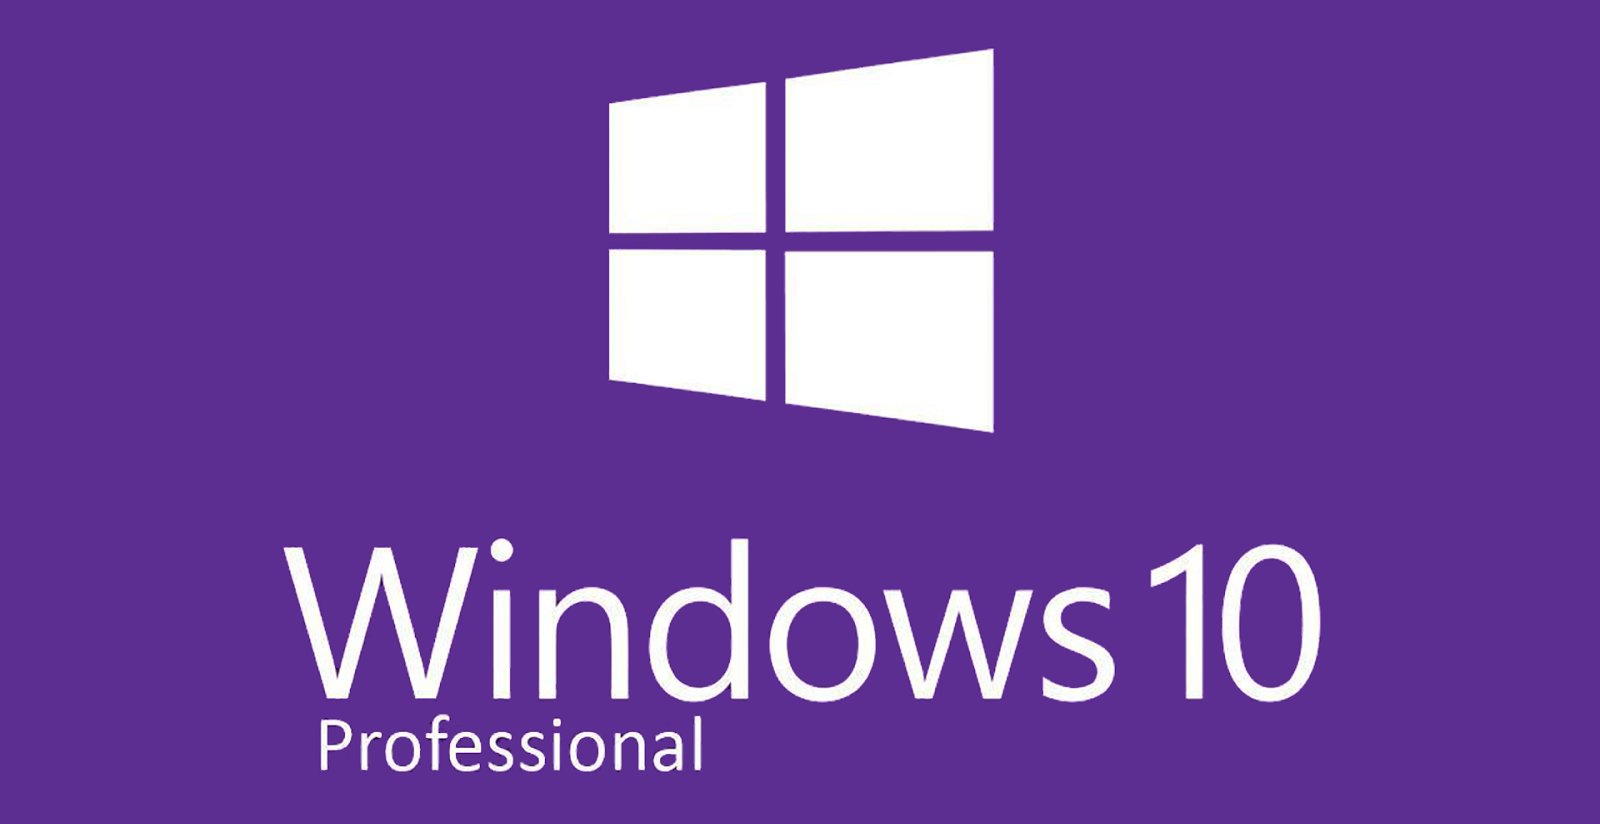 Microsoft Windows 10. Windows 10 Pro. Microsoft Windows 10 professional. Логотип Windows 10. Производитель windows 10